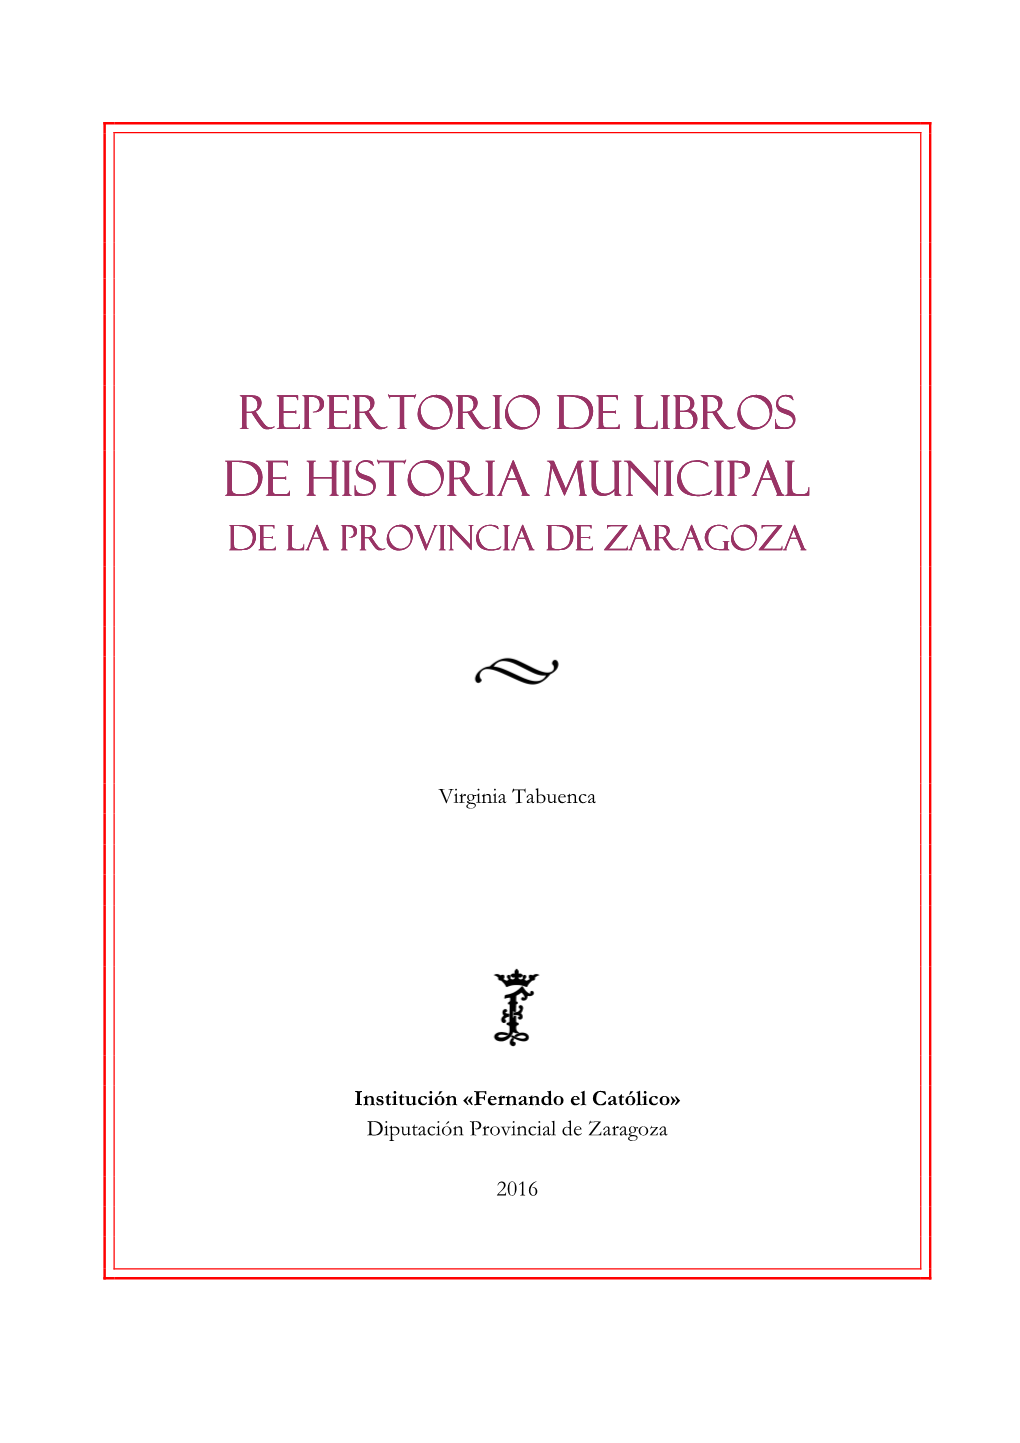 REPERTORIO DE LIBROS DE HISTORIA MUNICIPAL De LA PROVINCIA DE ZARAGOZA